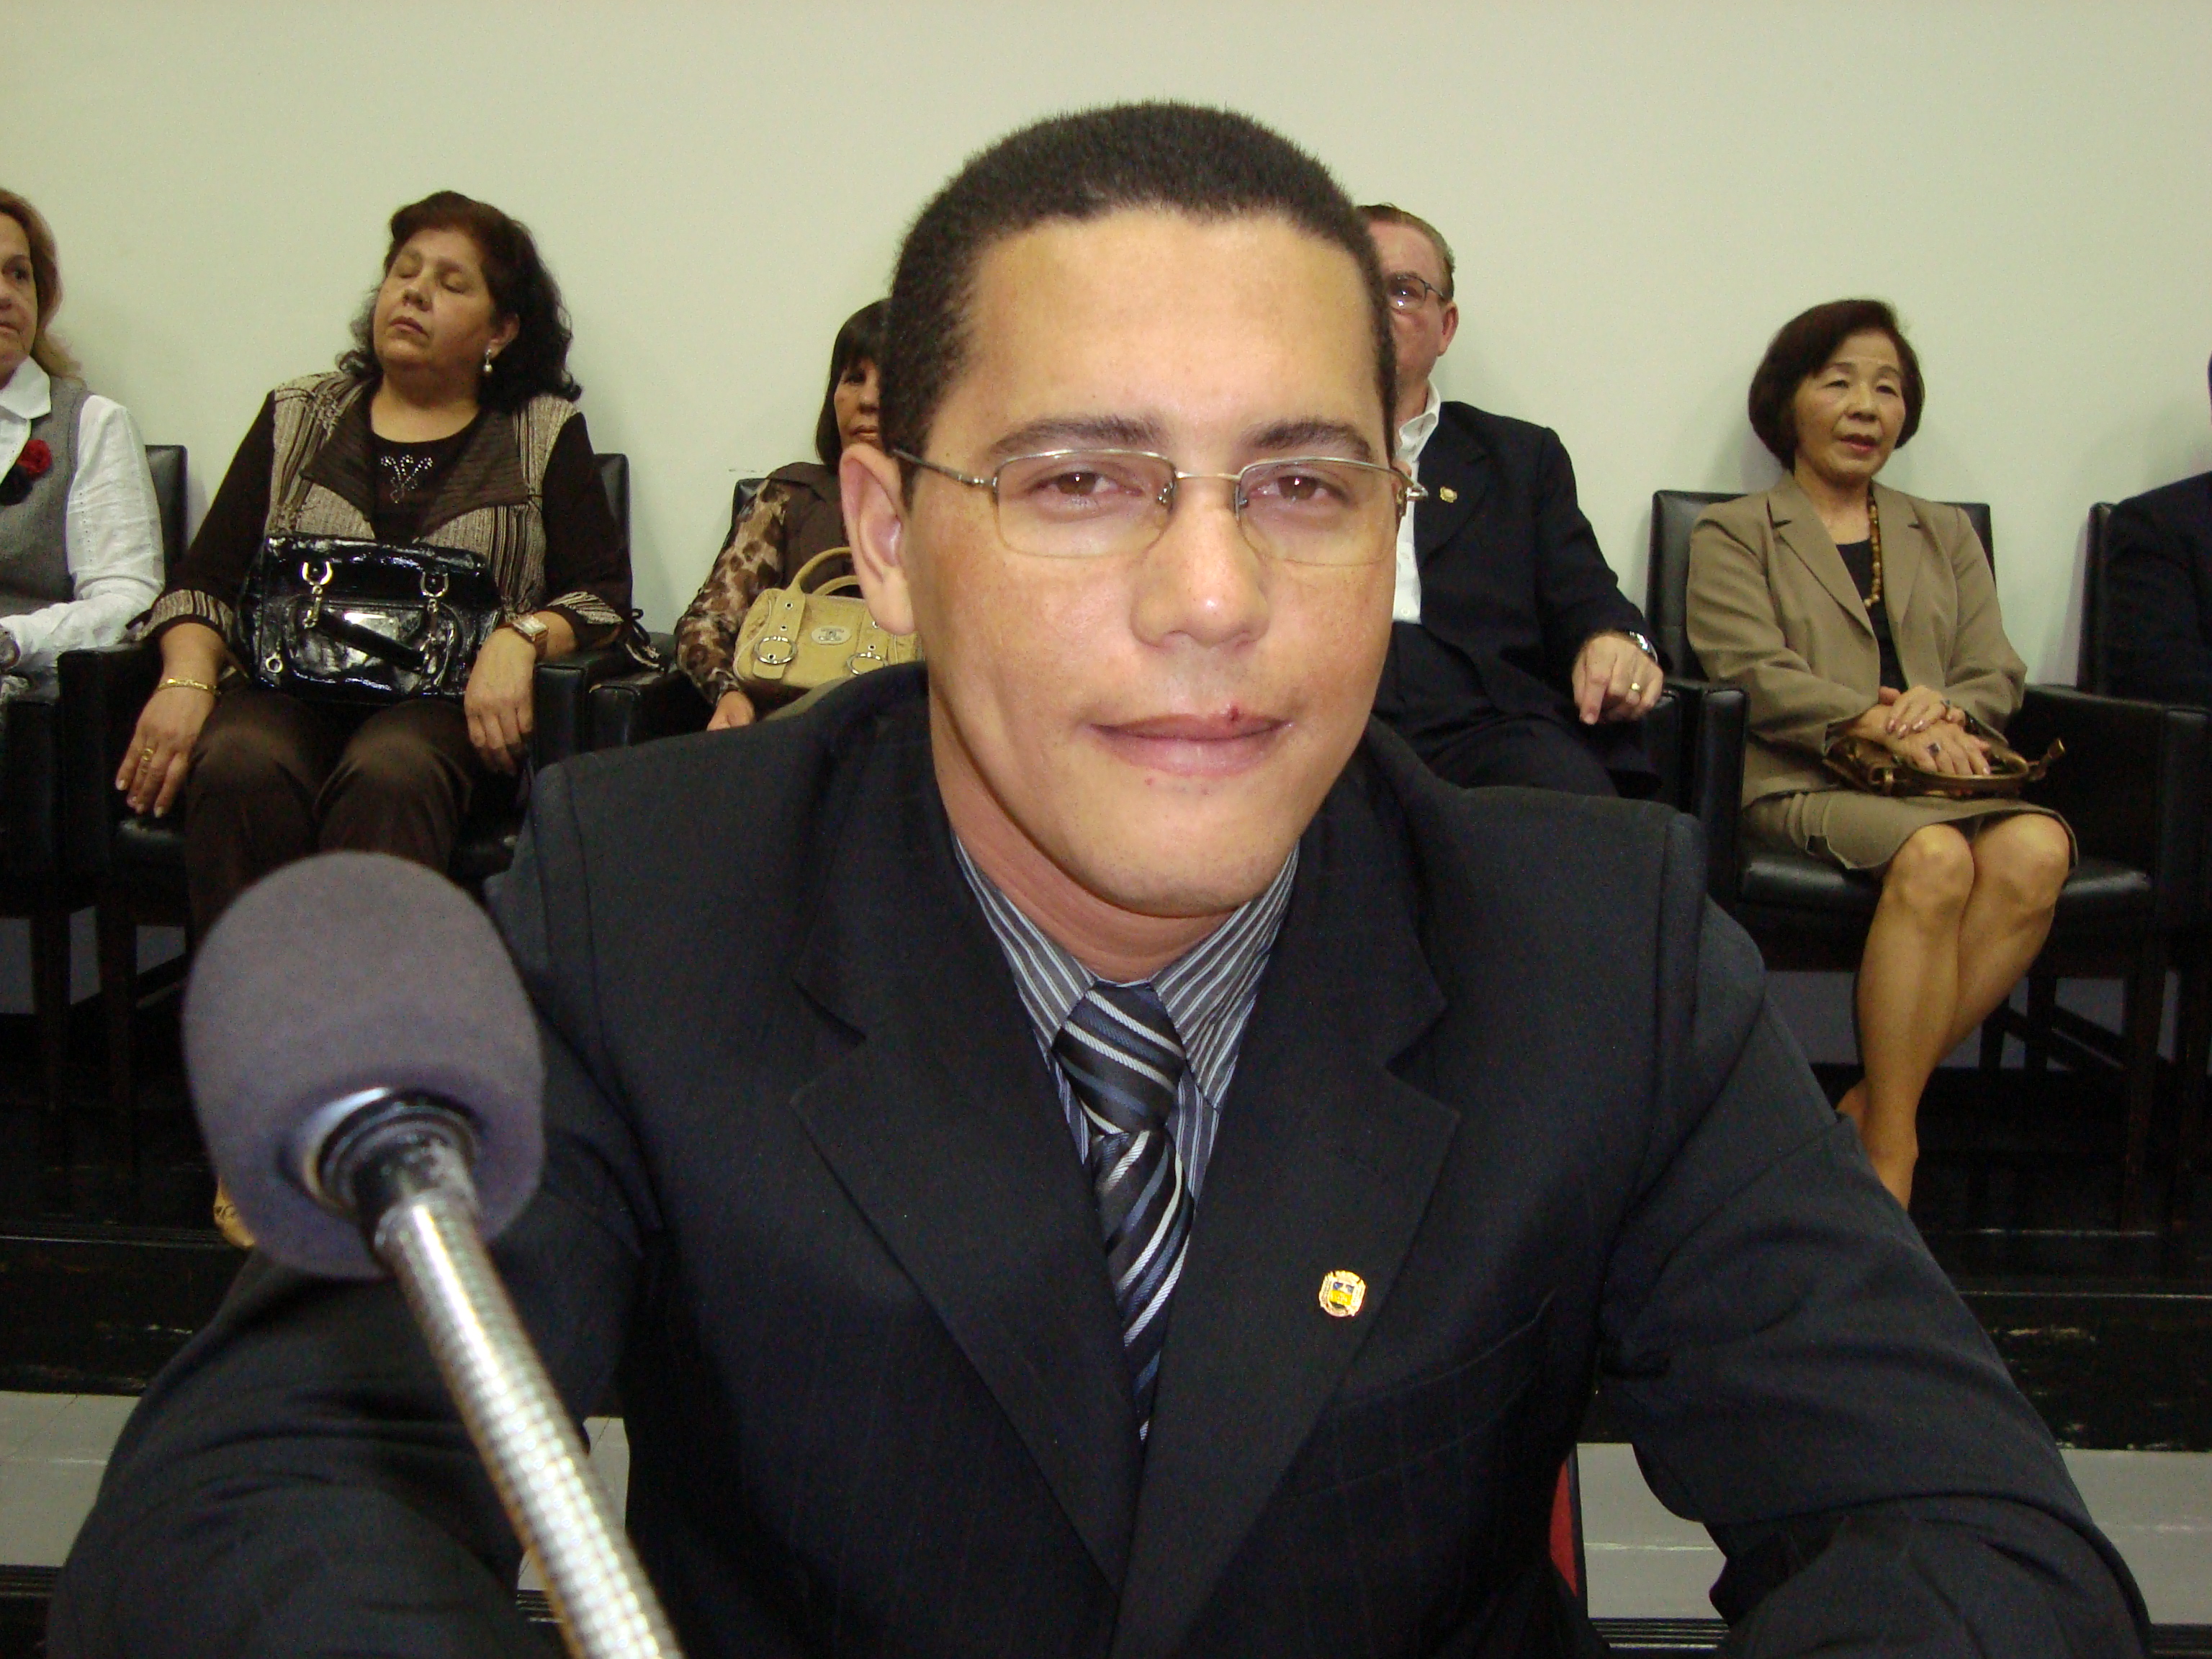 Vereador denuncia “grupo de extermínio” em Apucarana